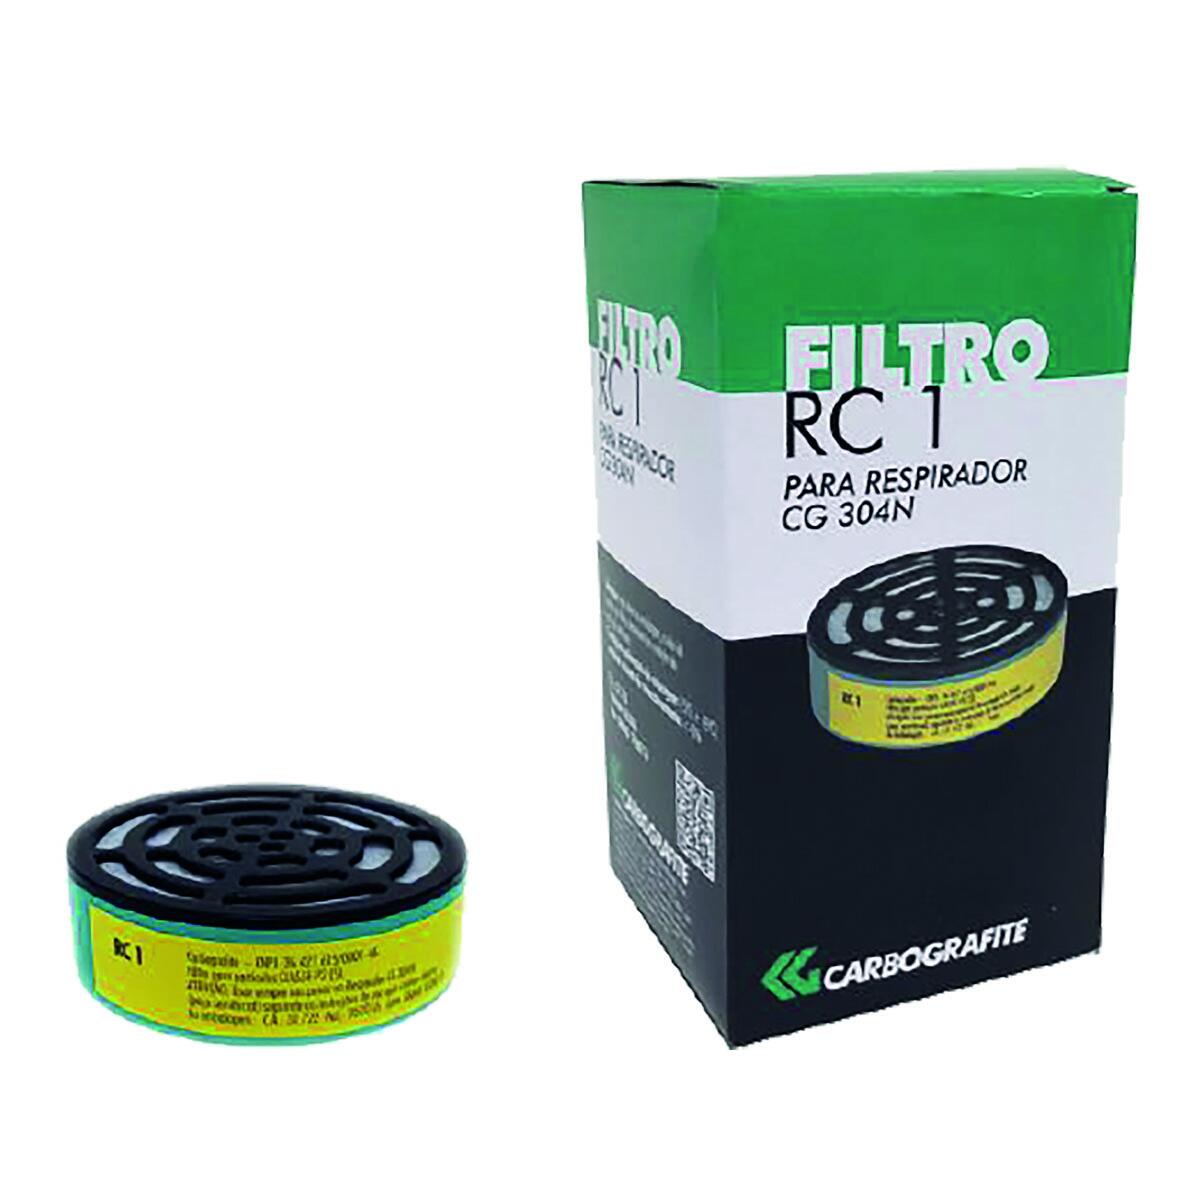 Filtro Respirador Rc1 para Classe P2 Carbografite